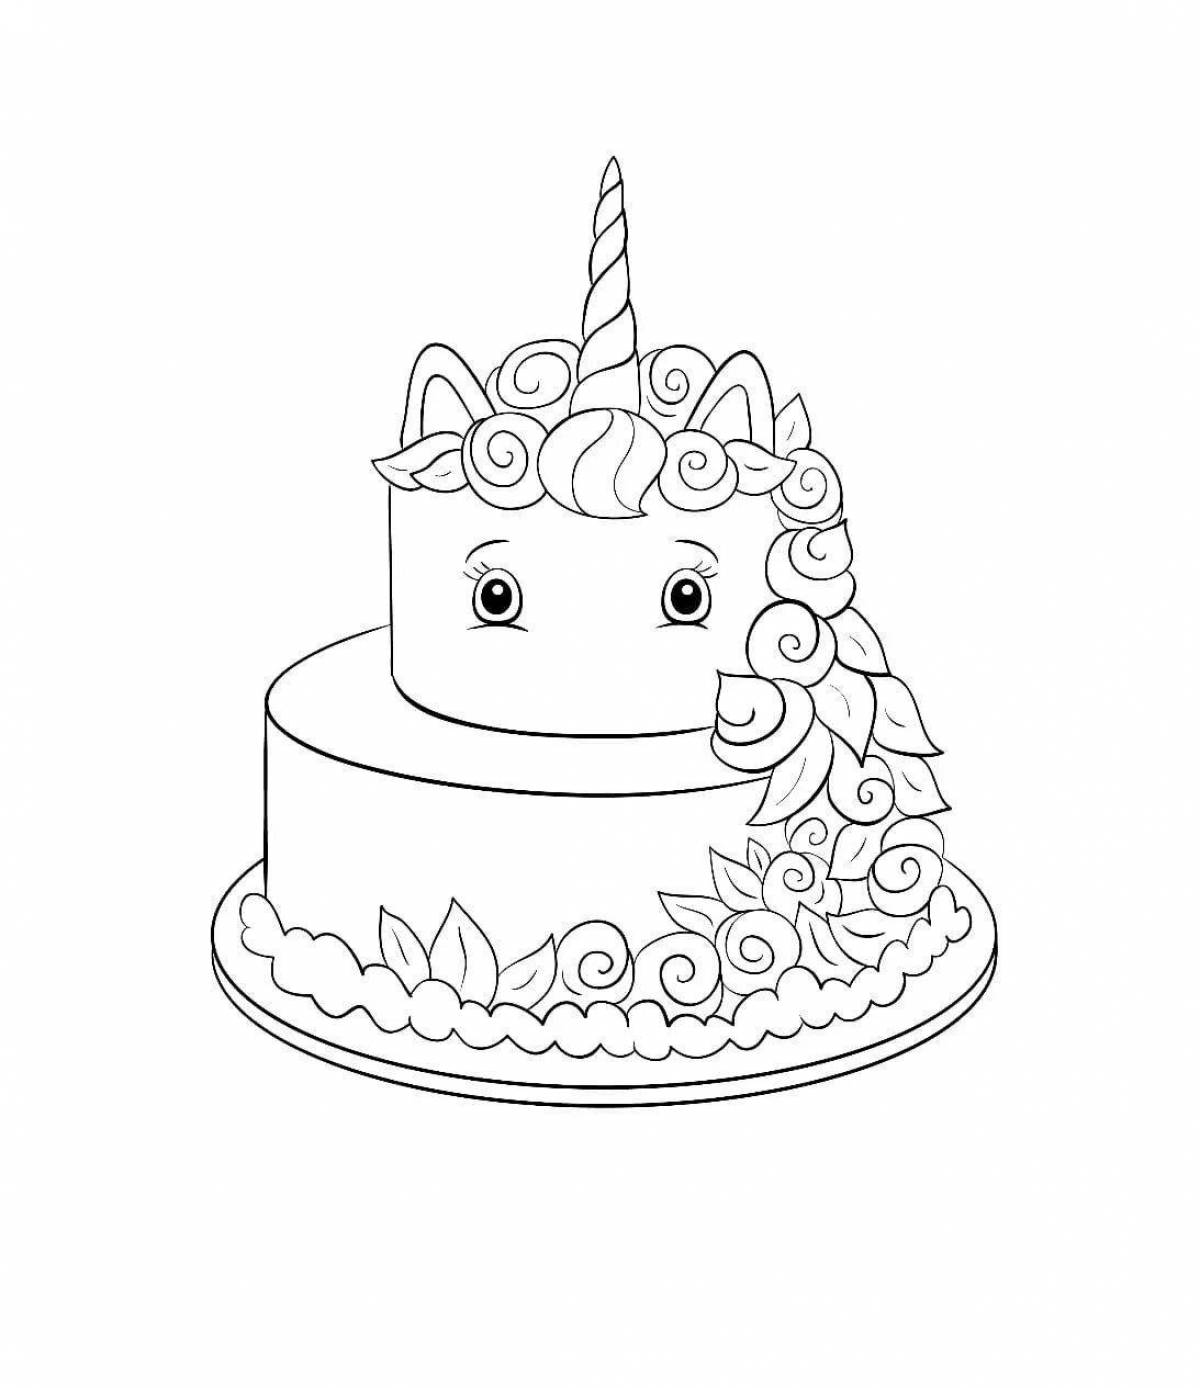 Charming unicorn cake coloring book